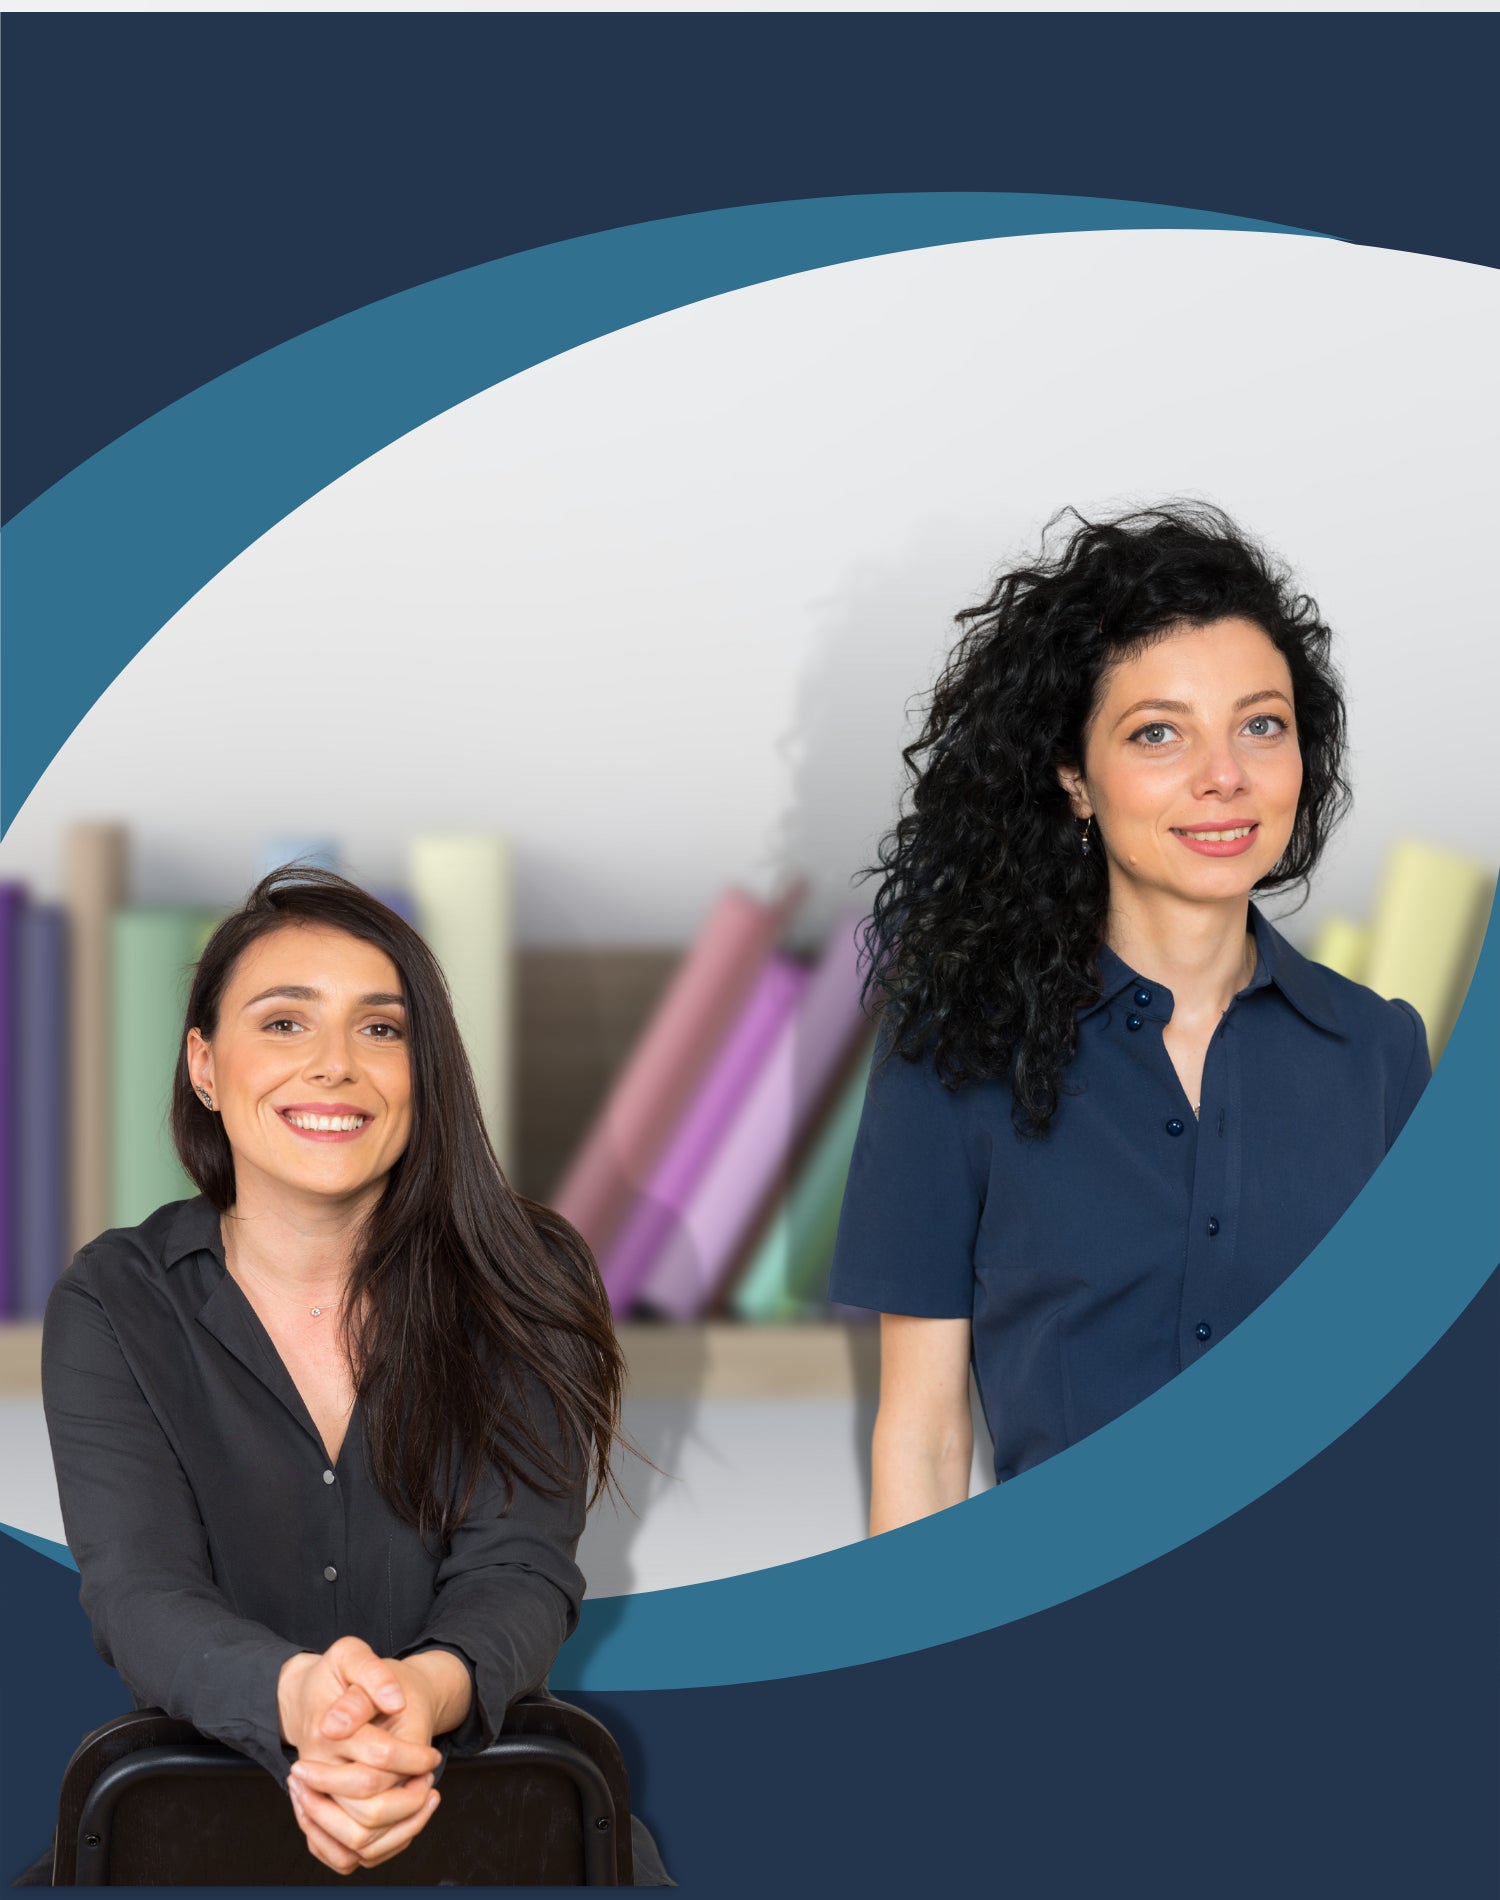 toeasemymind's therapists: Isabela Stanciu and Mara Craciunescu